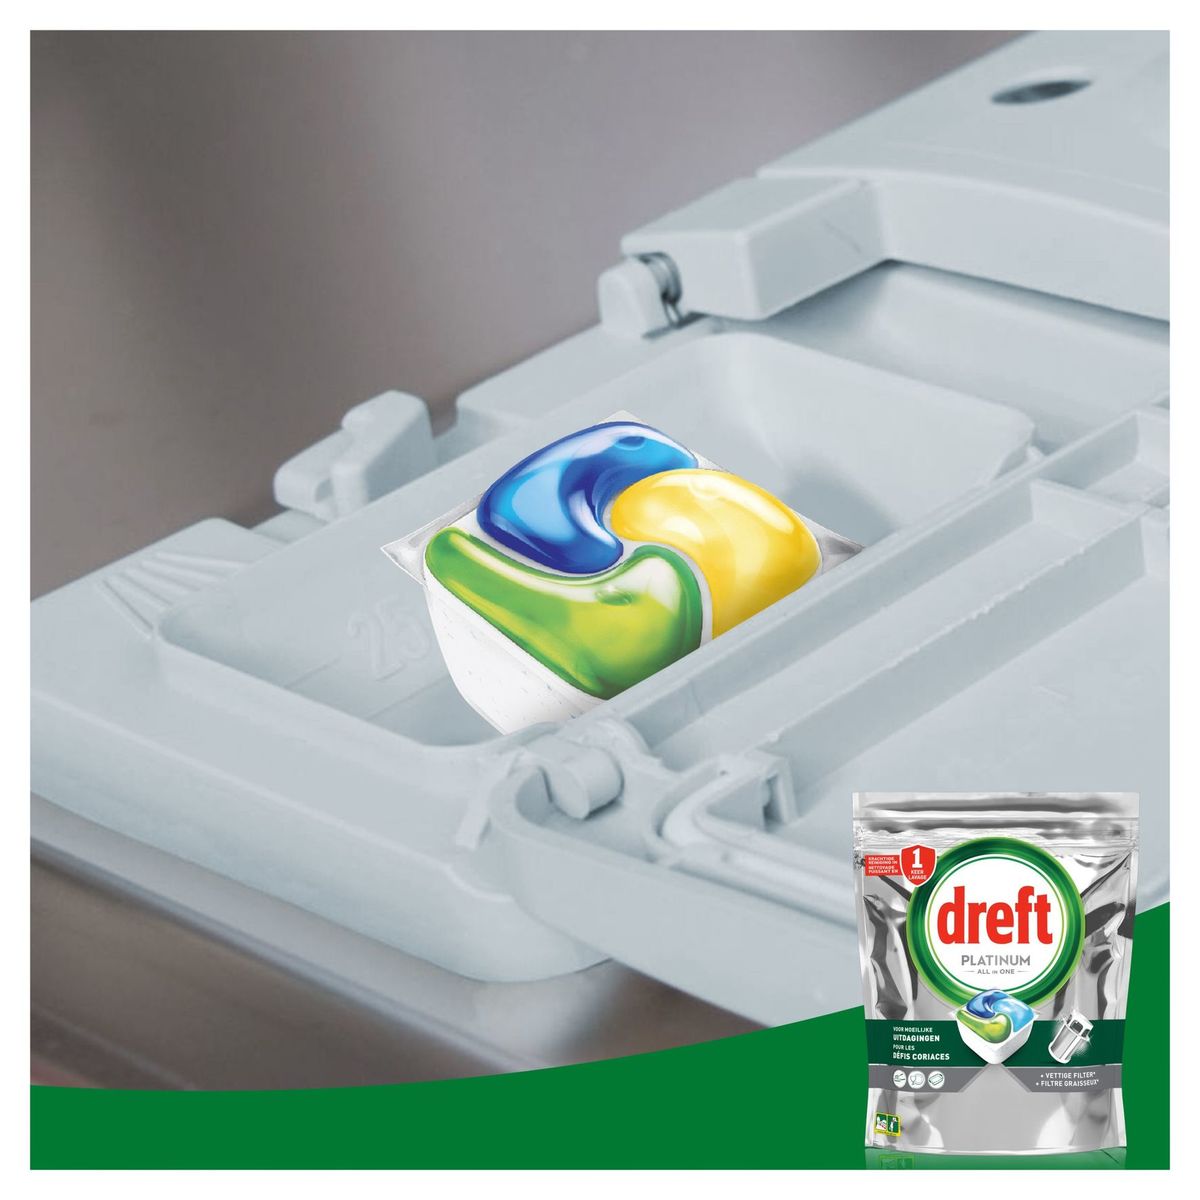 Dreft Platinum Tablettes Lave-vaisselle All In One, Regular, 31 Capsules